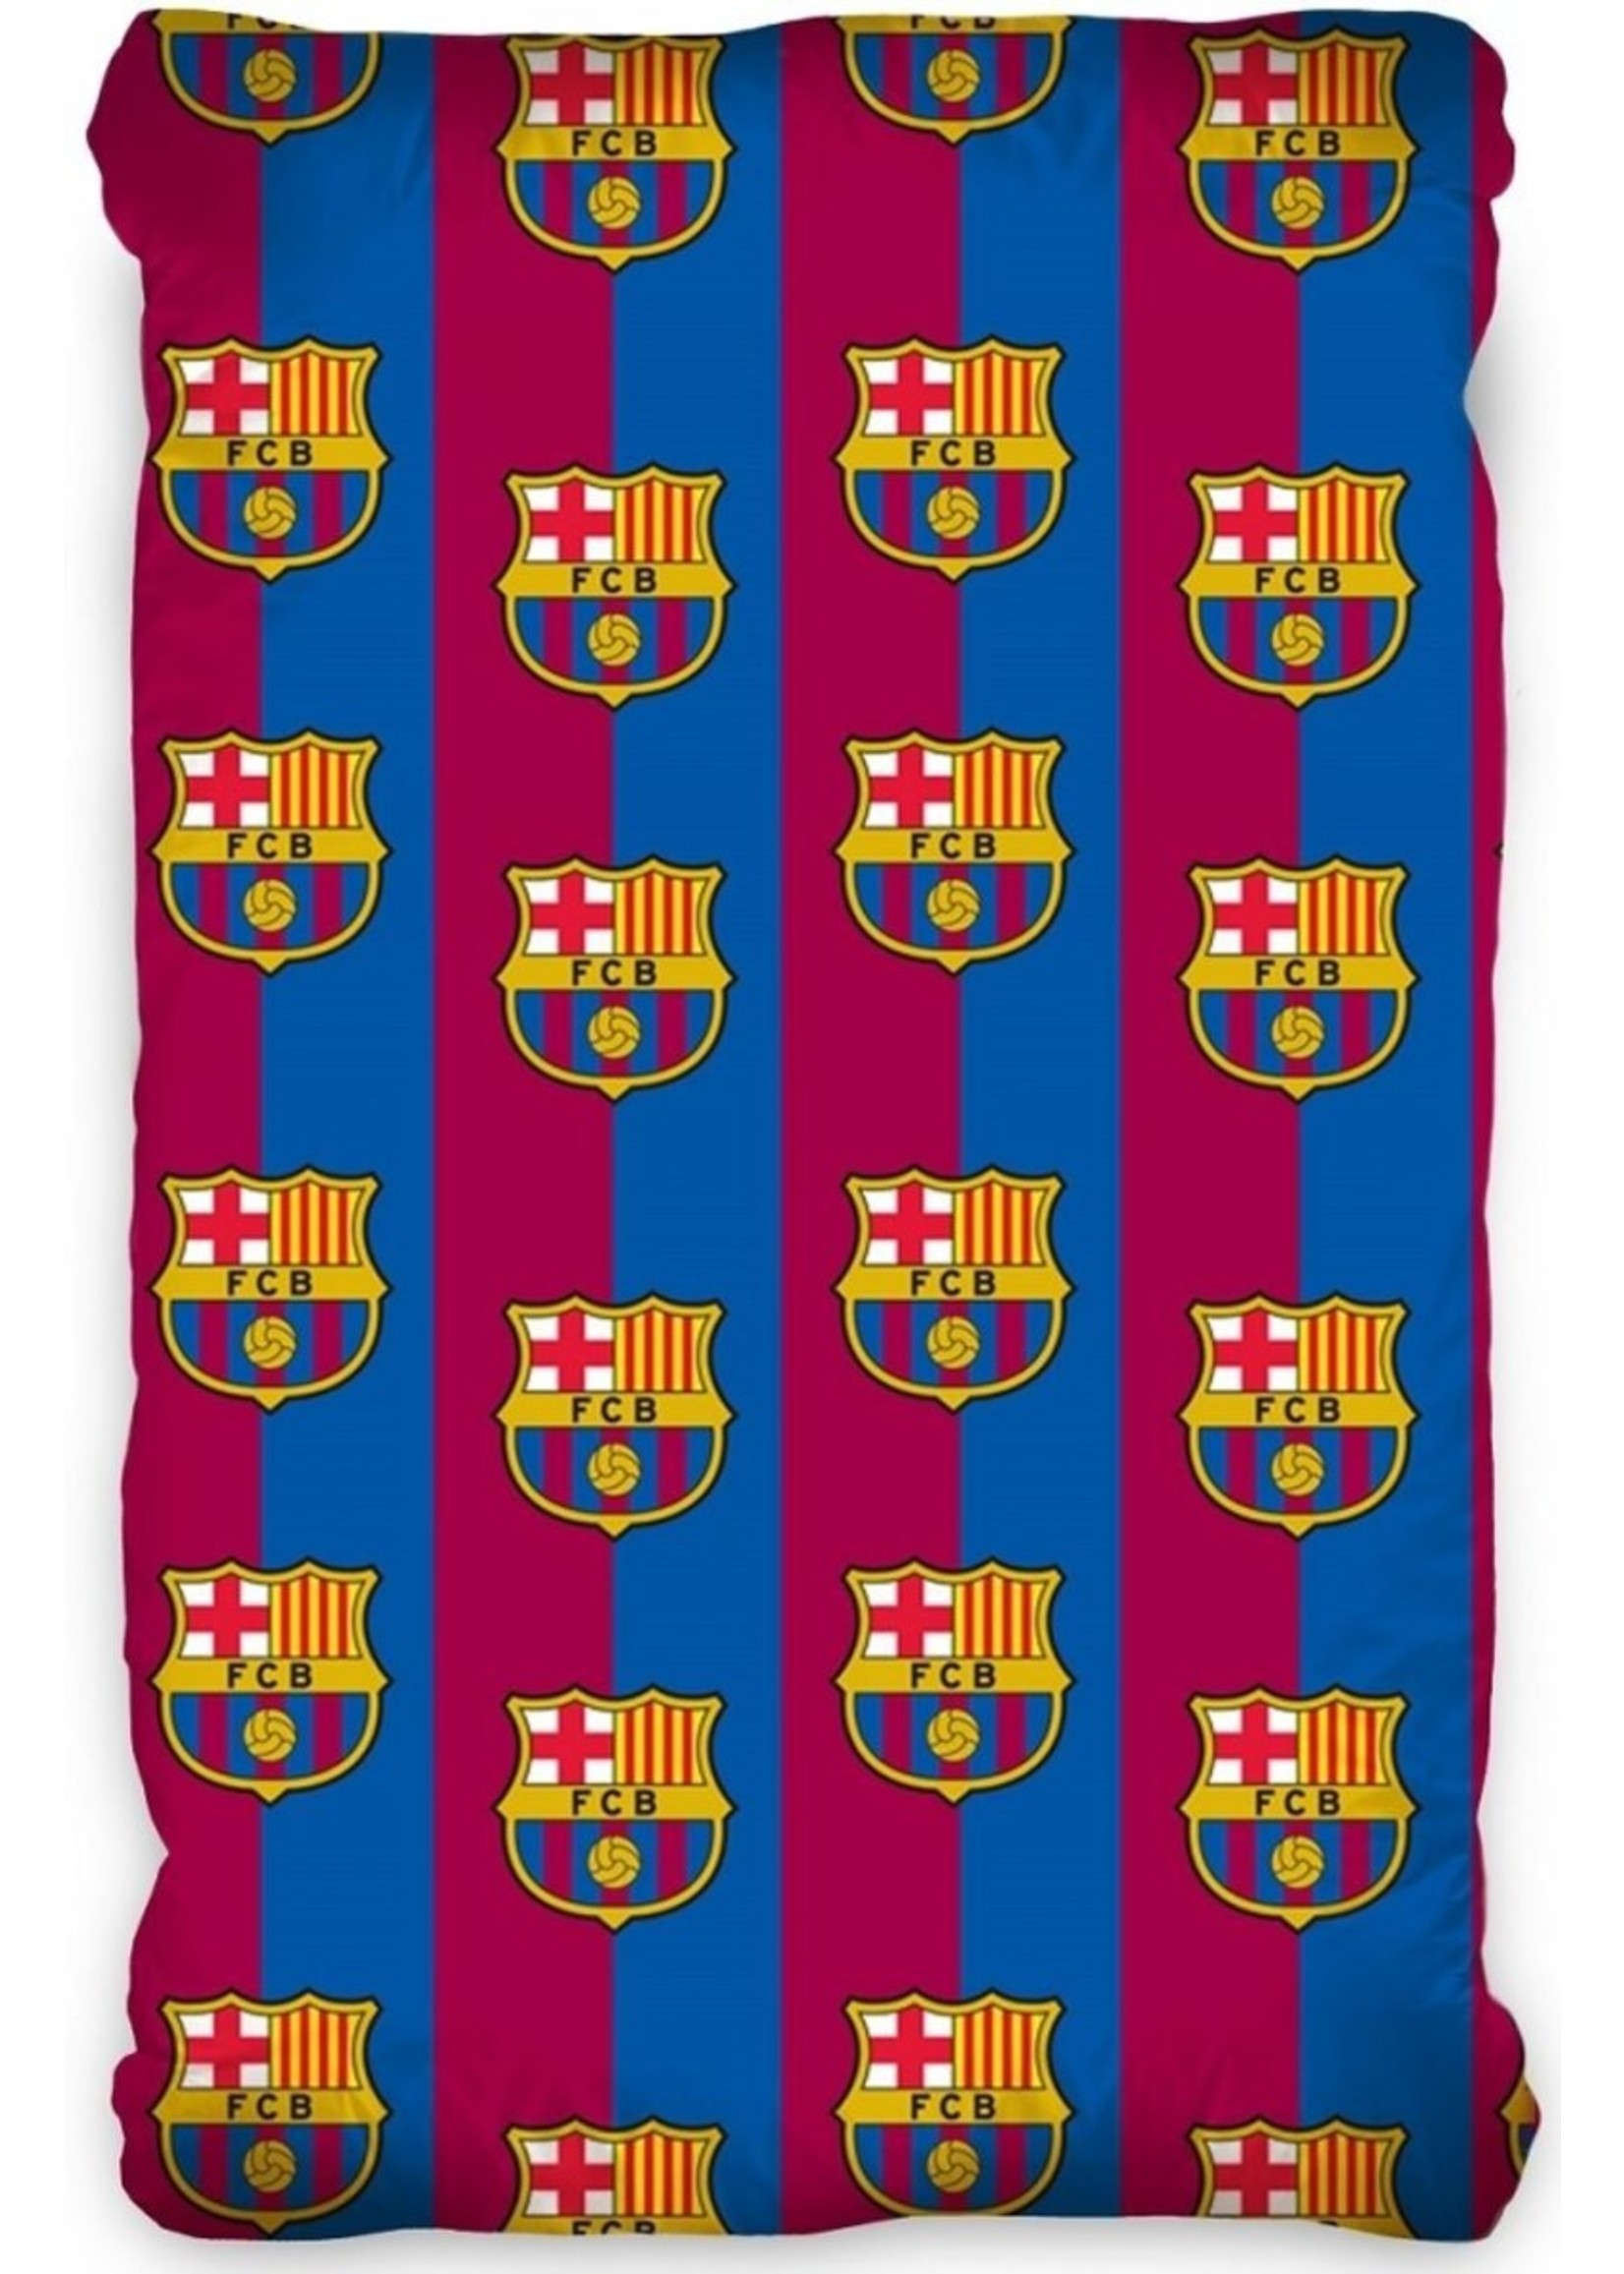 FC Barcelona Barcelona Fitted Sheet